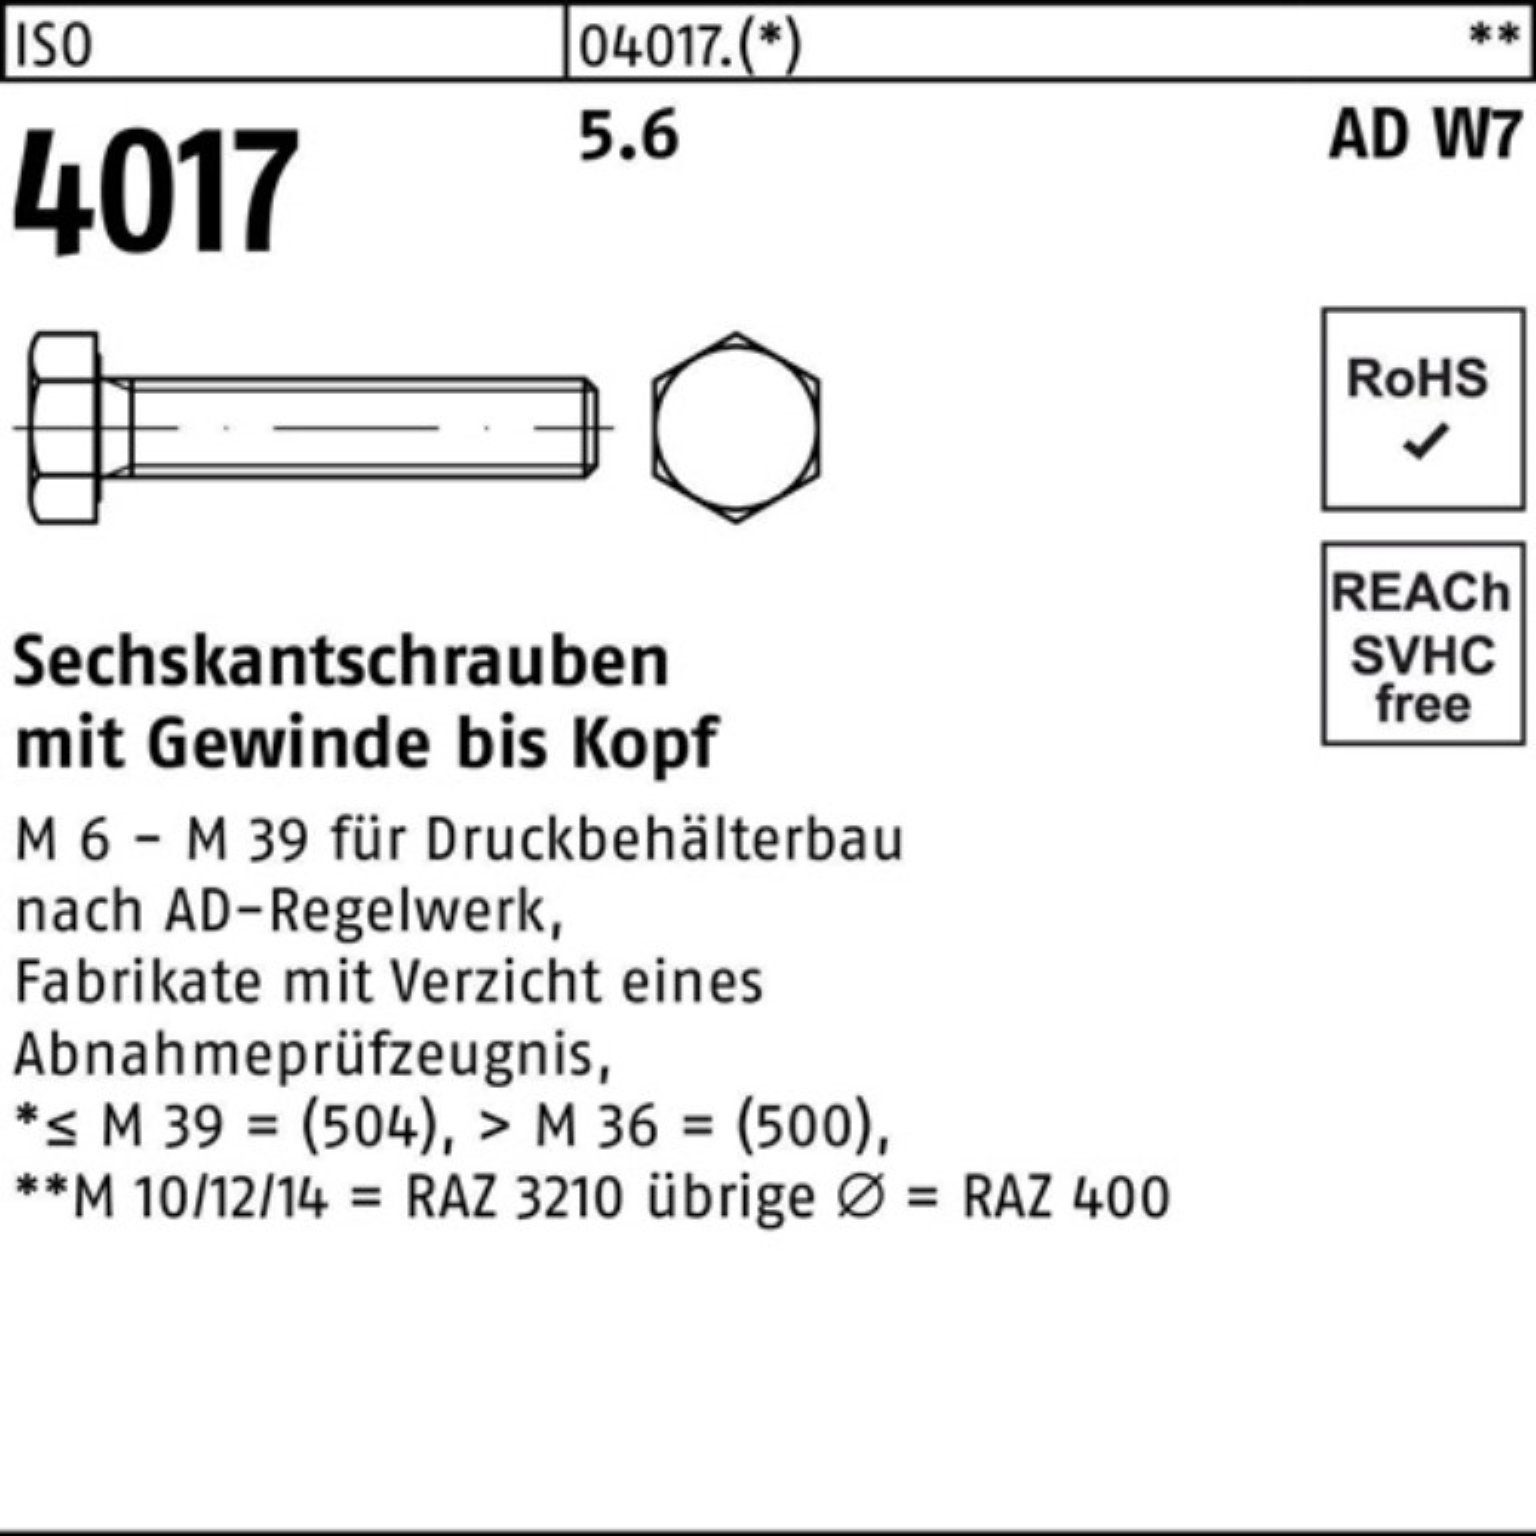 90 M36x W7 Sechskantschraube 1 IS Sechskantschraube Bufab ISO VG AD 4017 Stück 5.6 Pack 100er